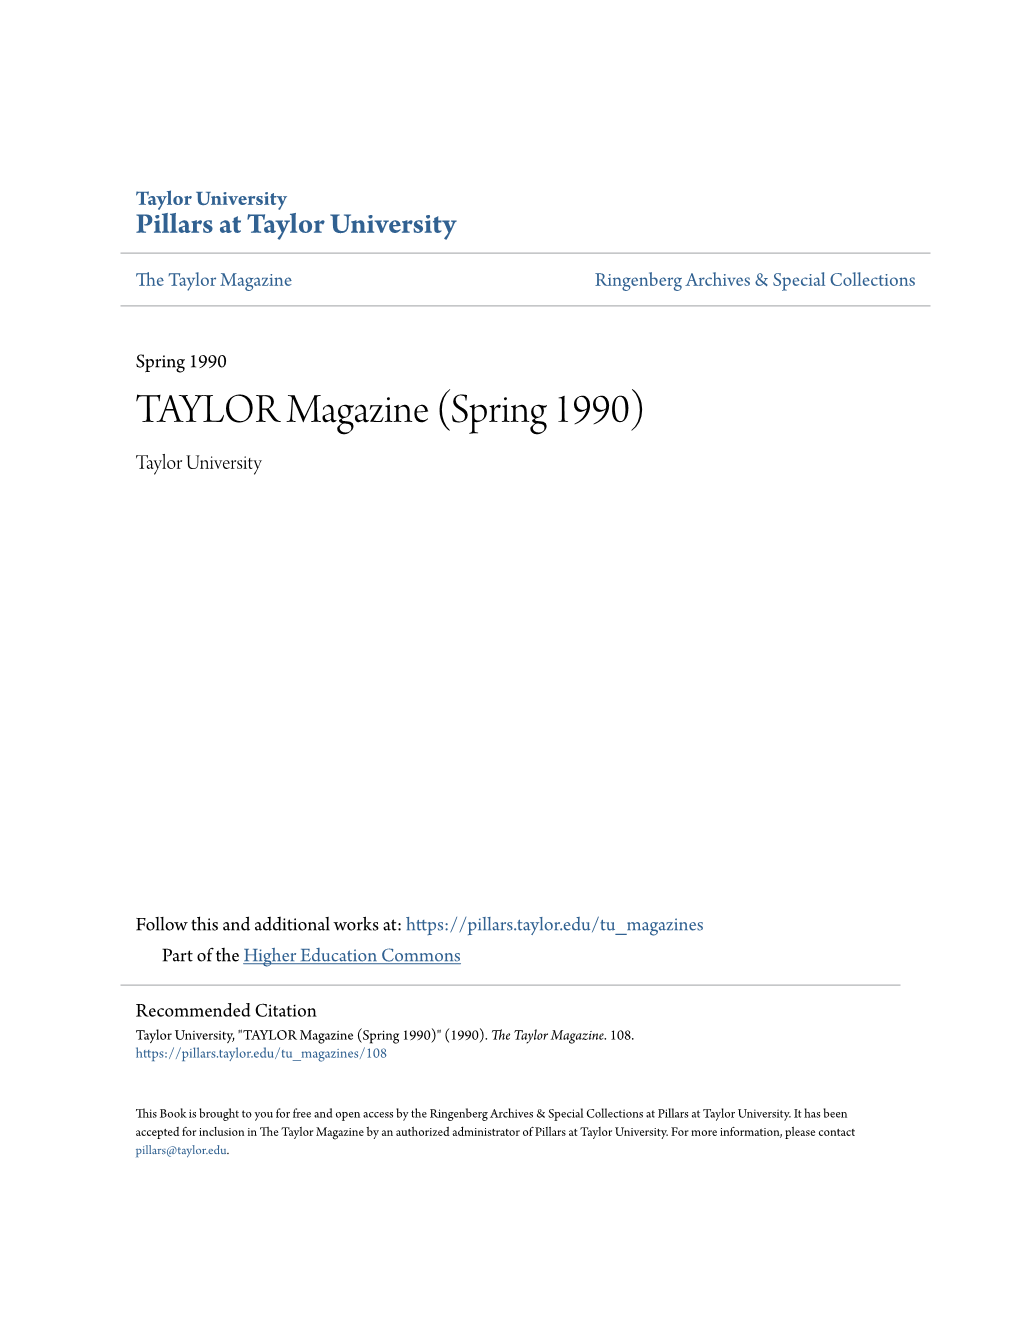 TAYLOR Magazine (Spring 1990) Taylor University